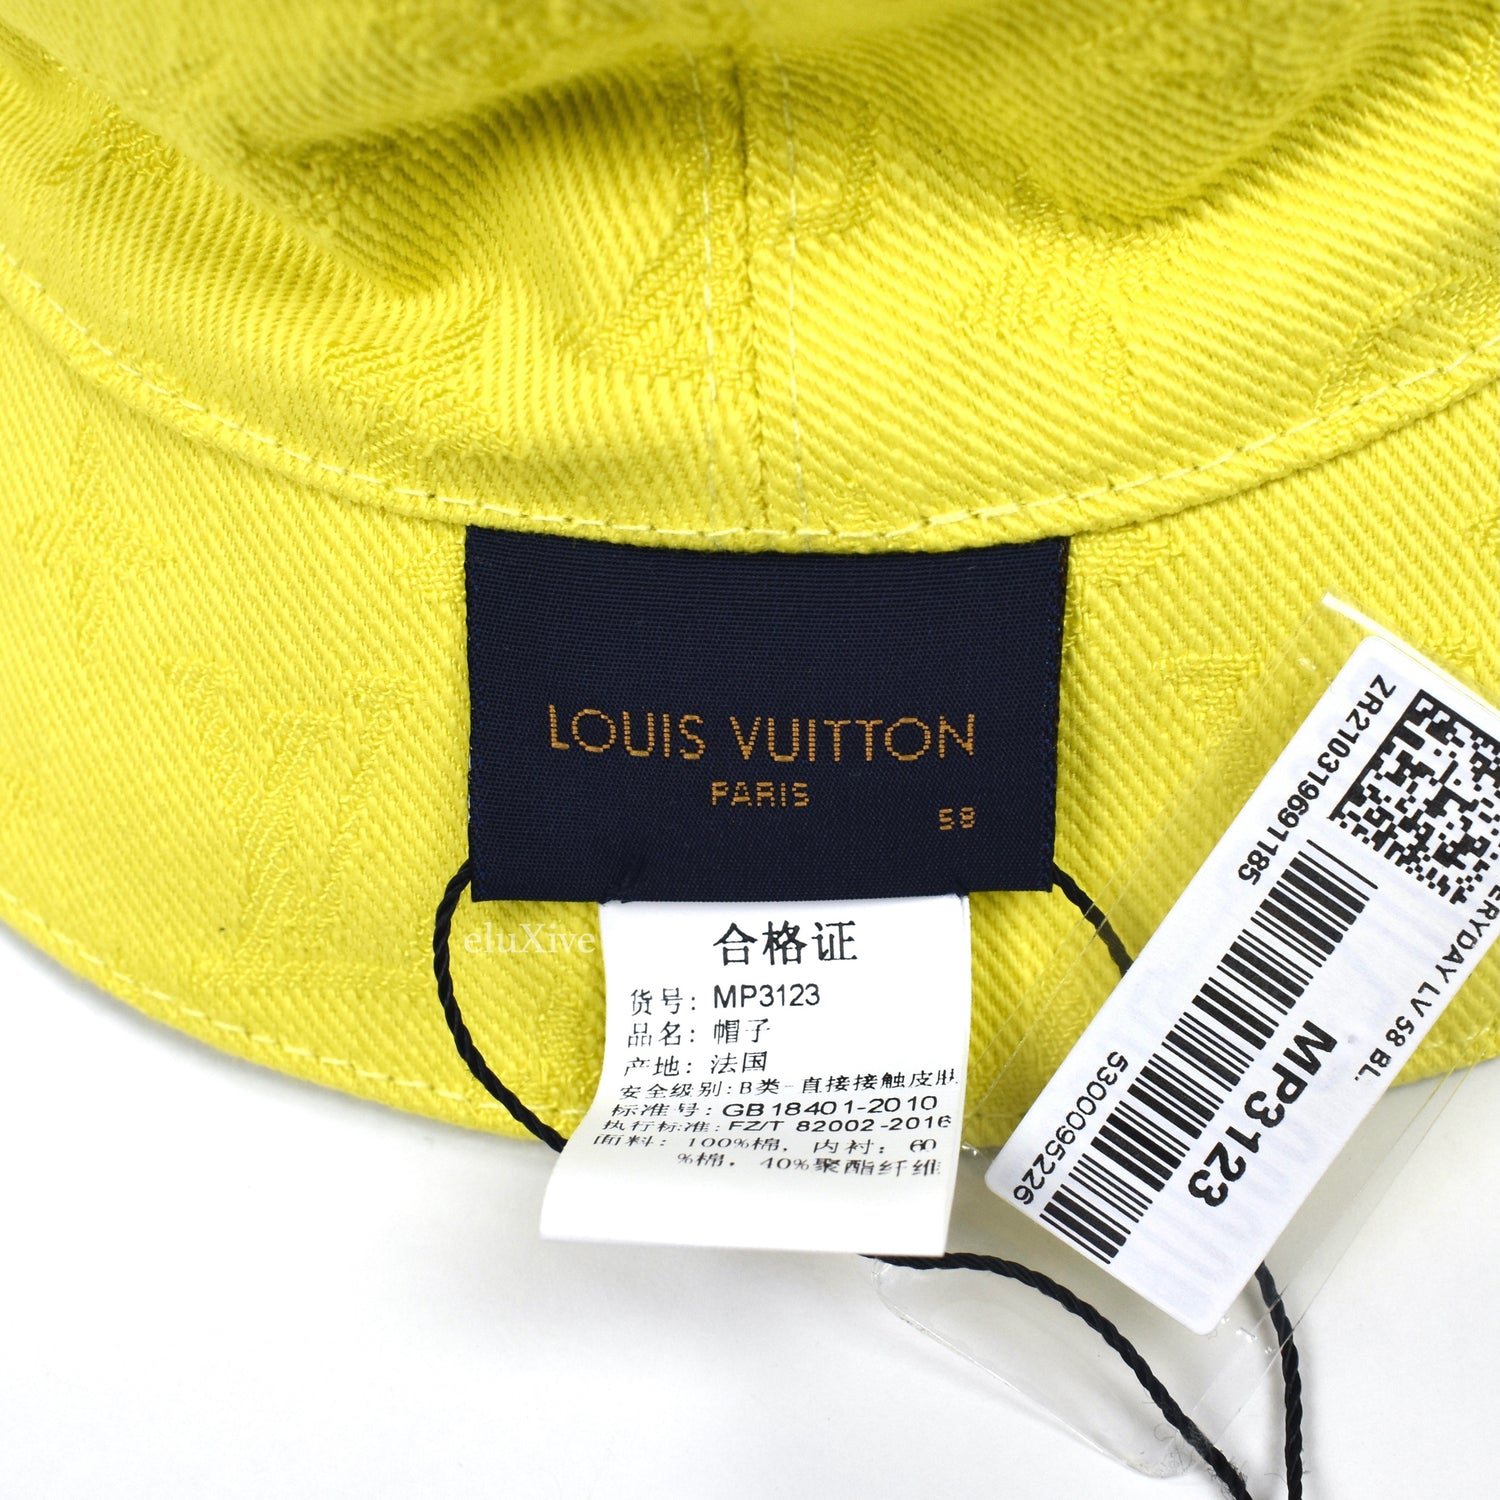 Louis Vuitton - LV Everyday Yellow Monogram Denim Bucket Hat – eluXive